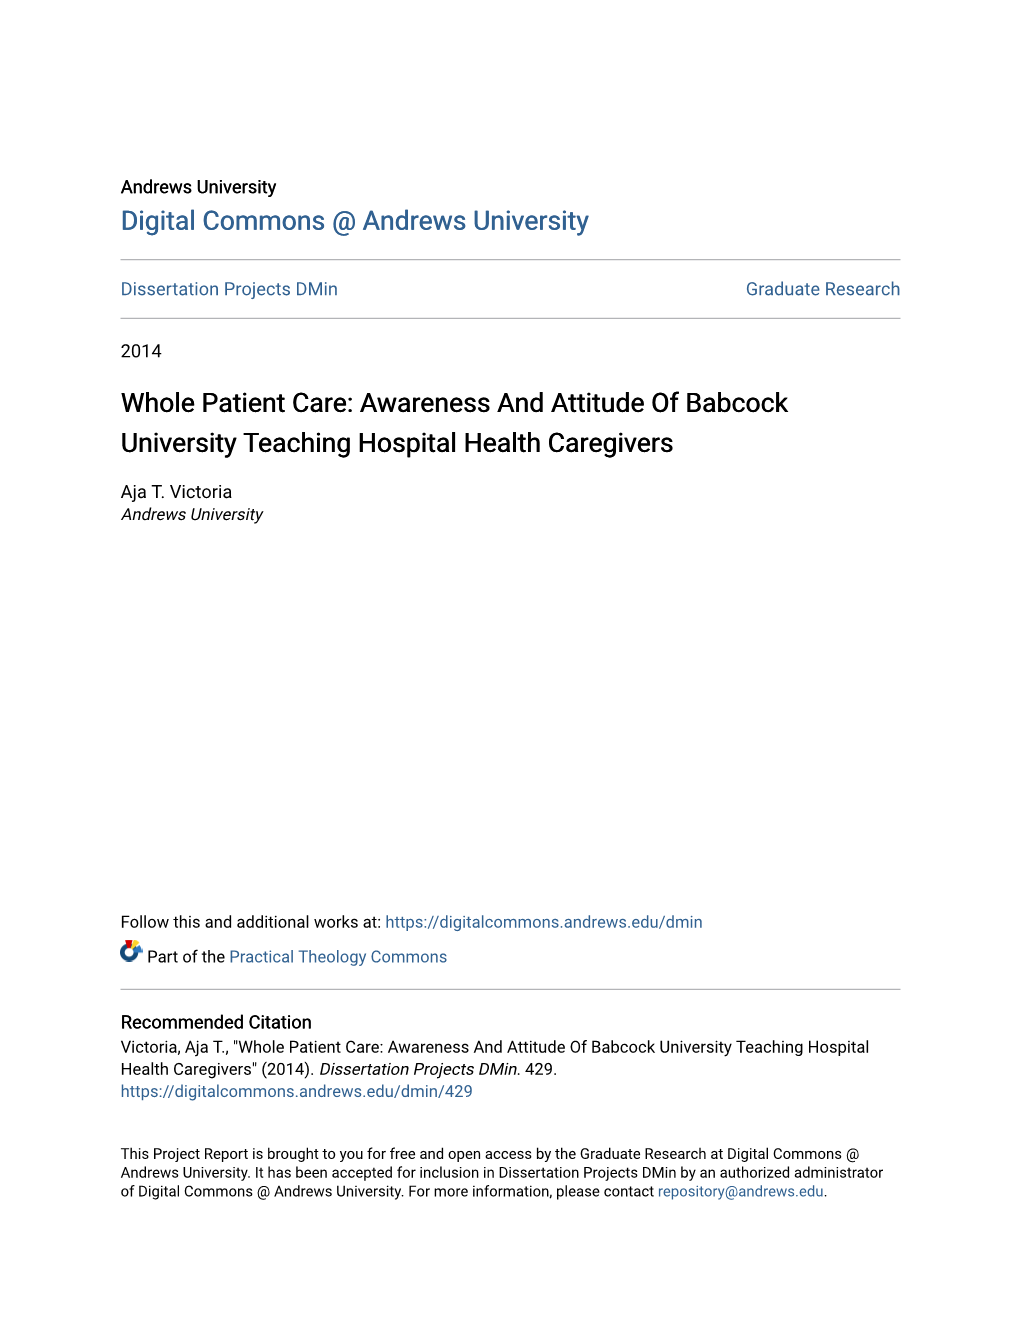 Awareness and Attitude of Babcock University Teaching Hospital Health Caregivers